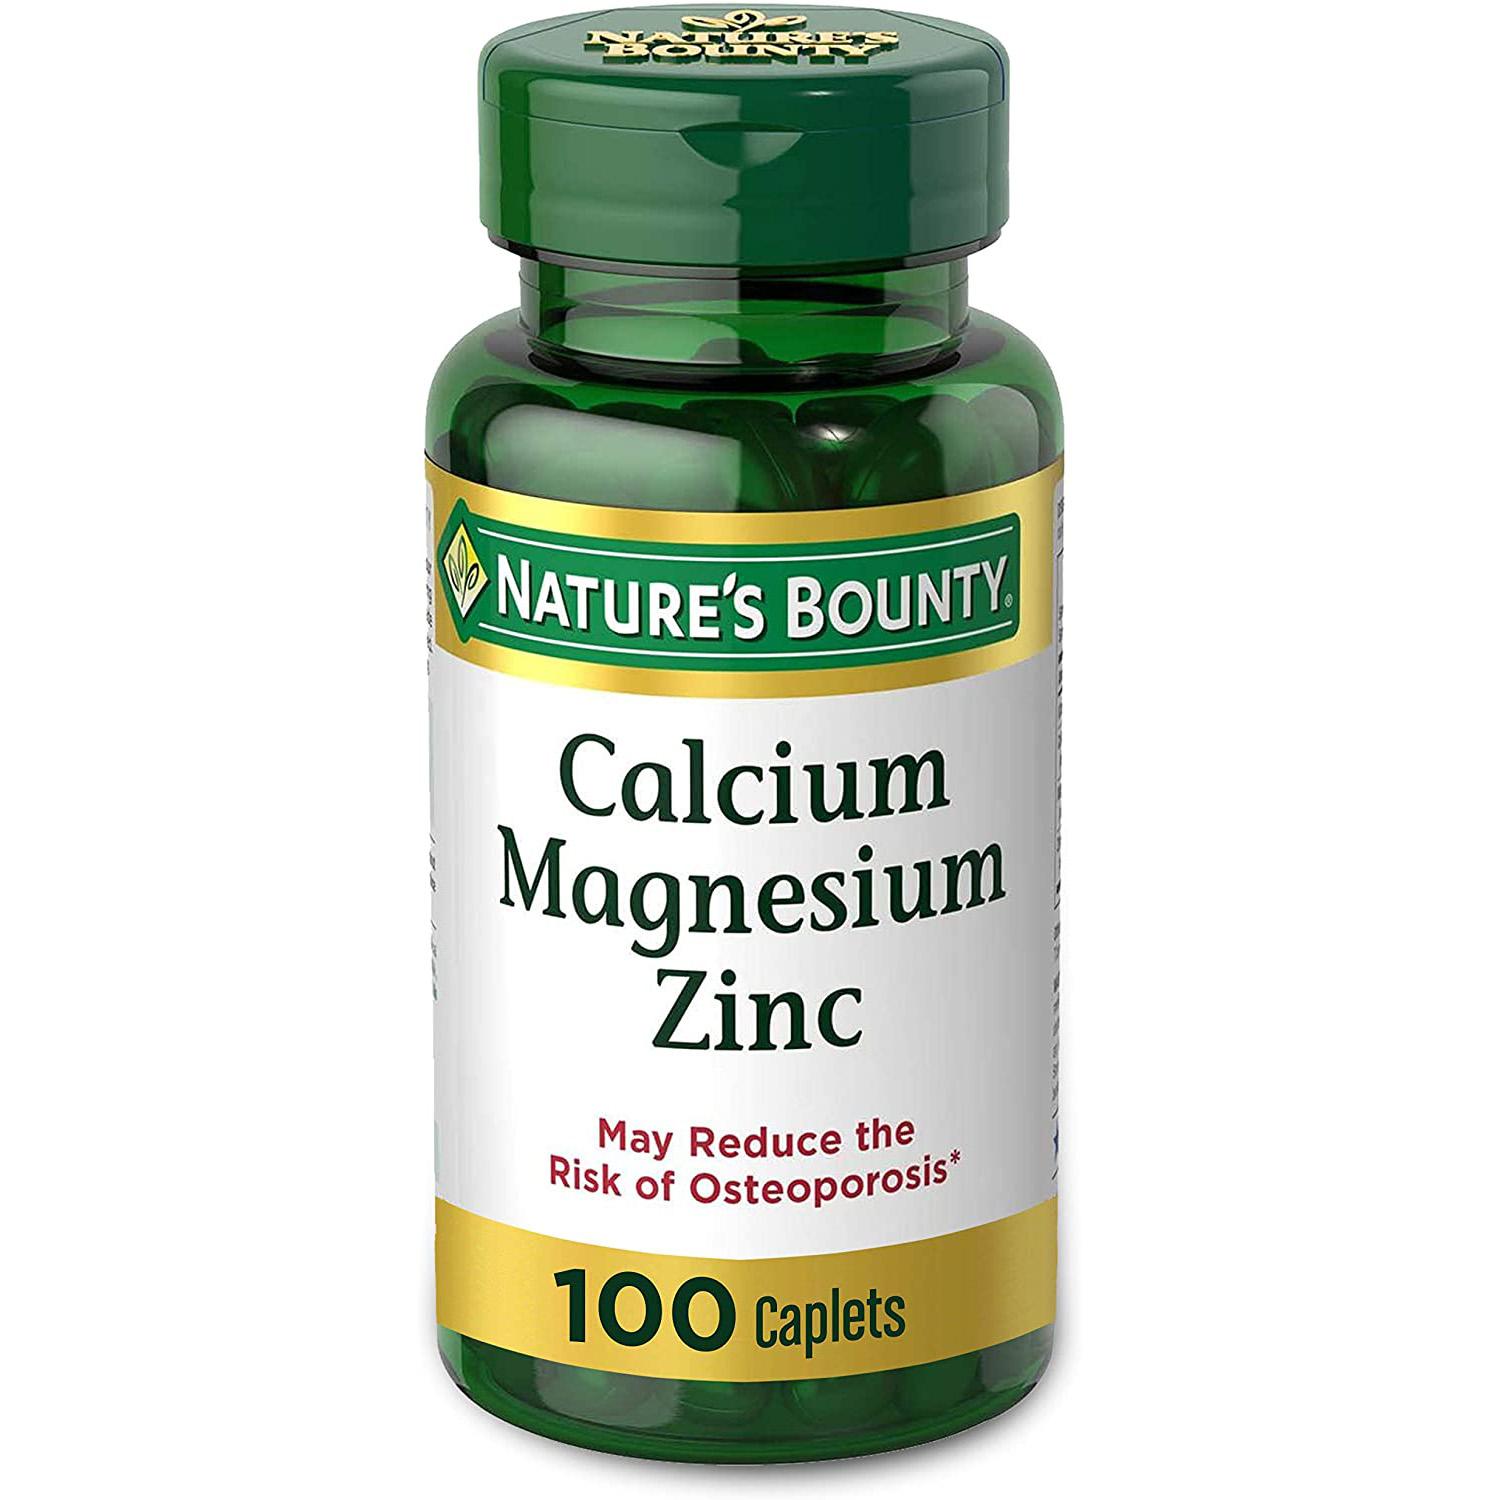 100 Natures Bounty Calcium Magnesium Zinc Supplement for $2.60 Shipped